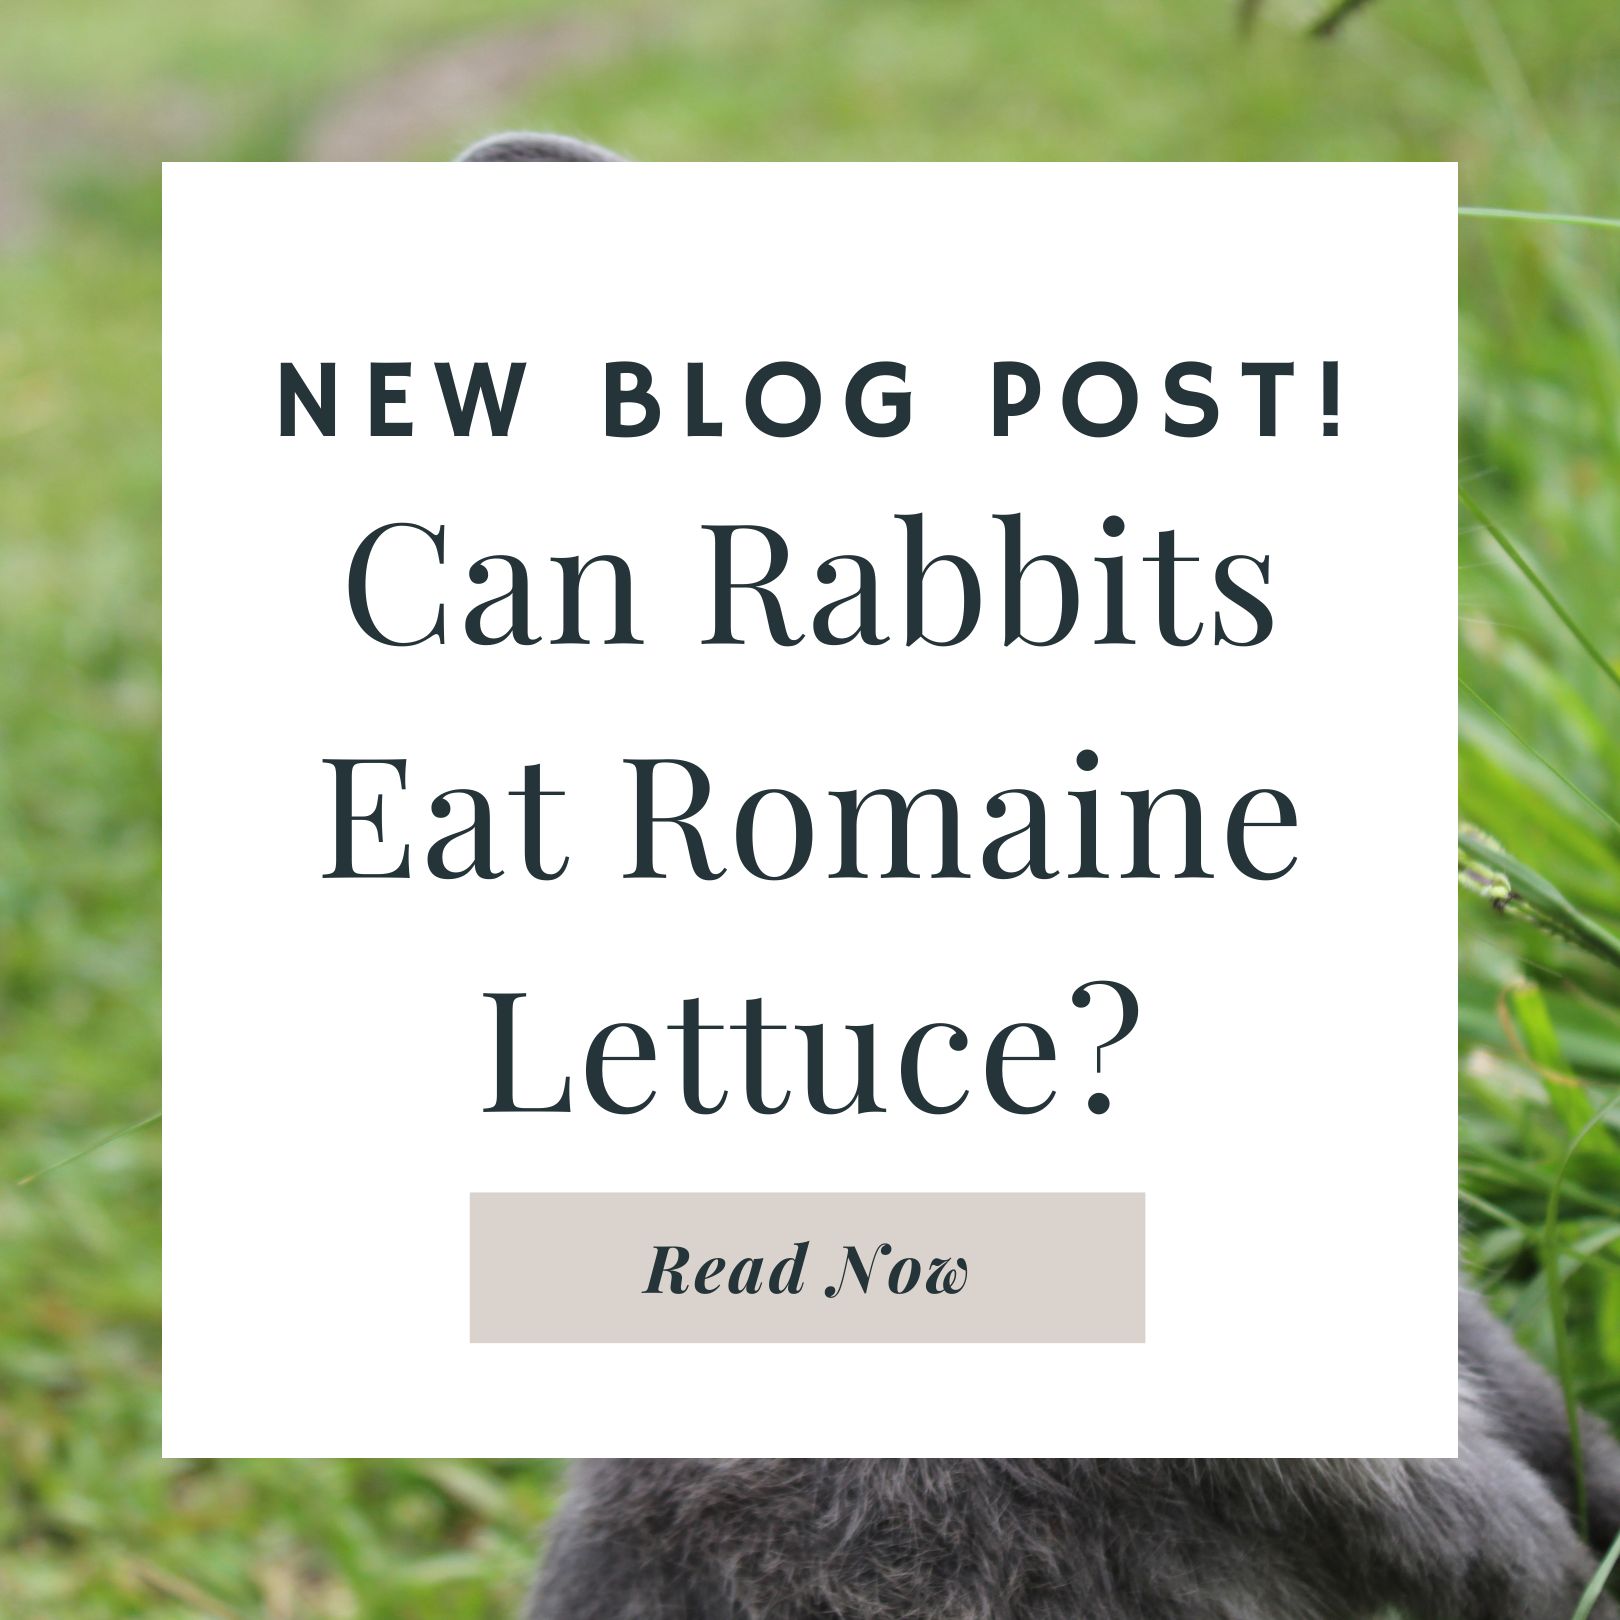 Can Rabbits Eat Romaine Lettuce?